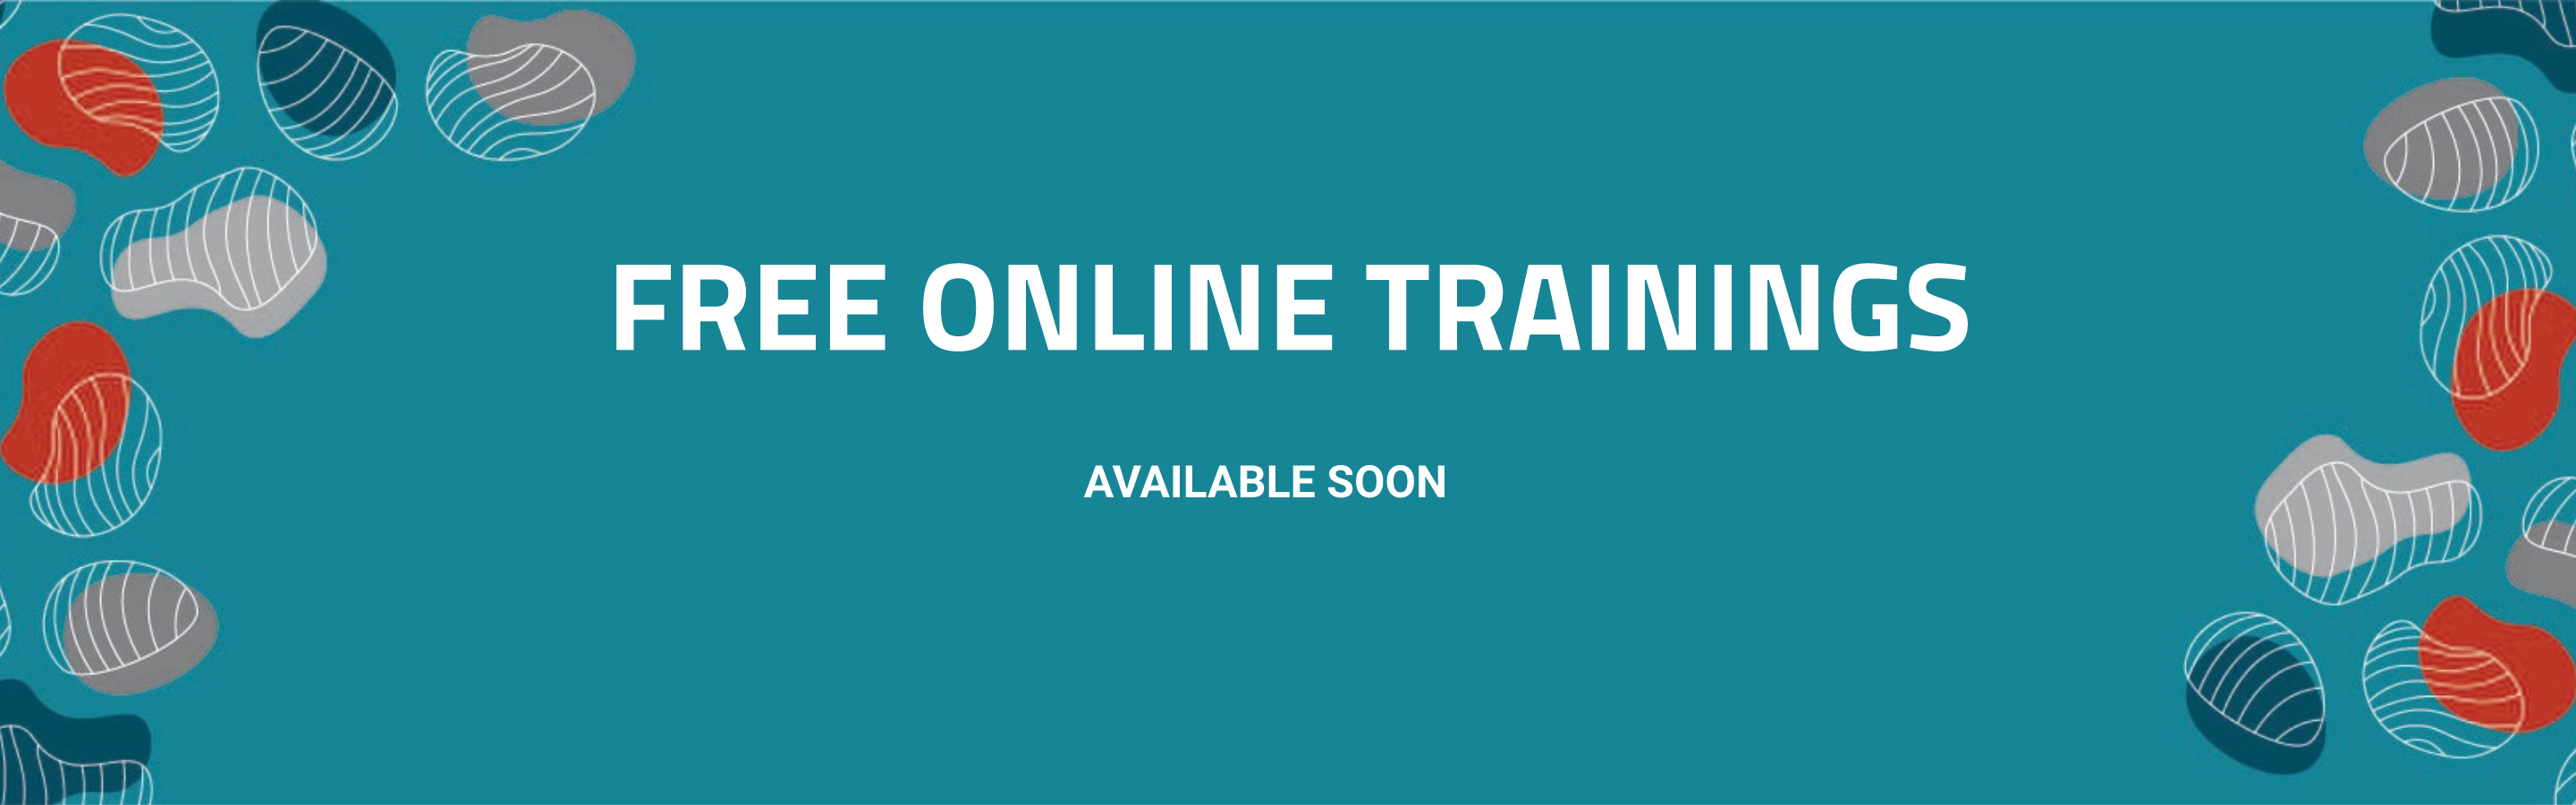 Free Online Trainings